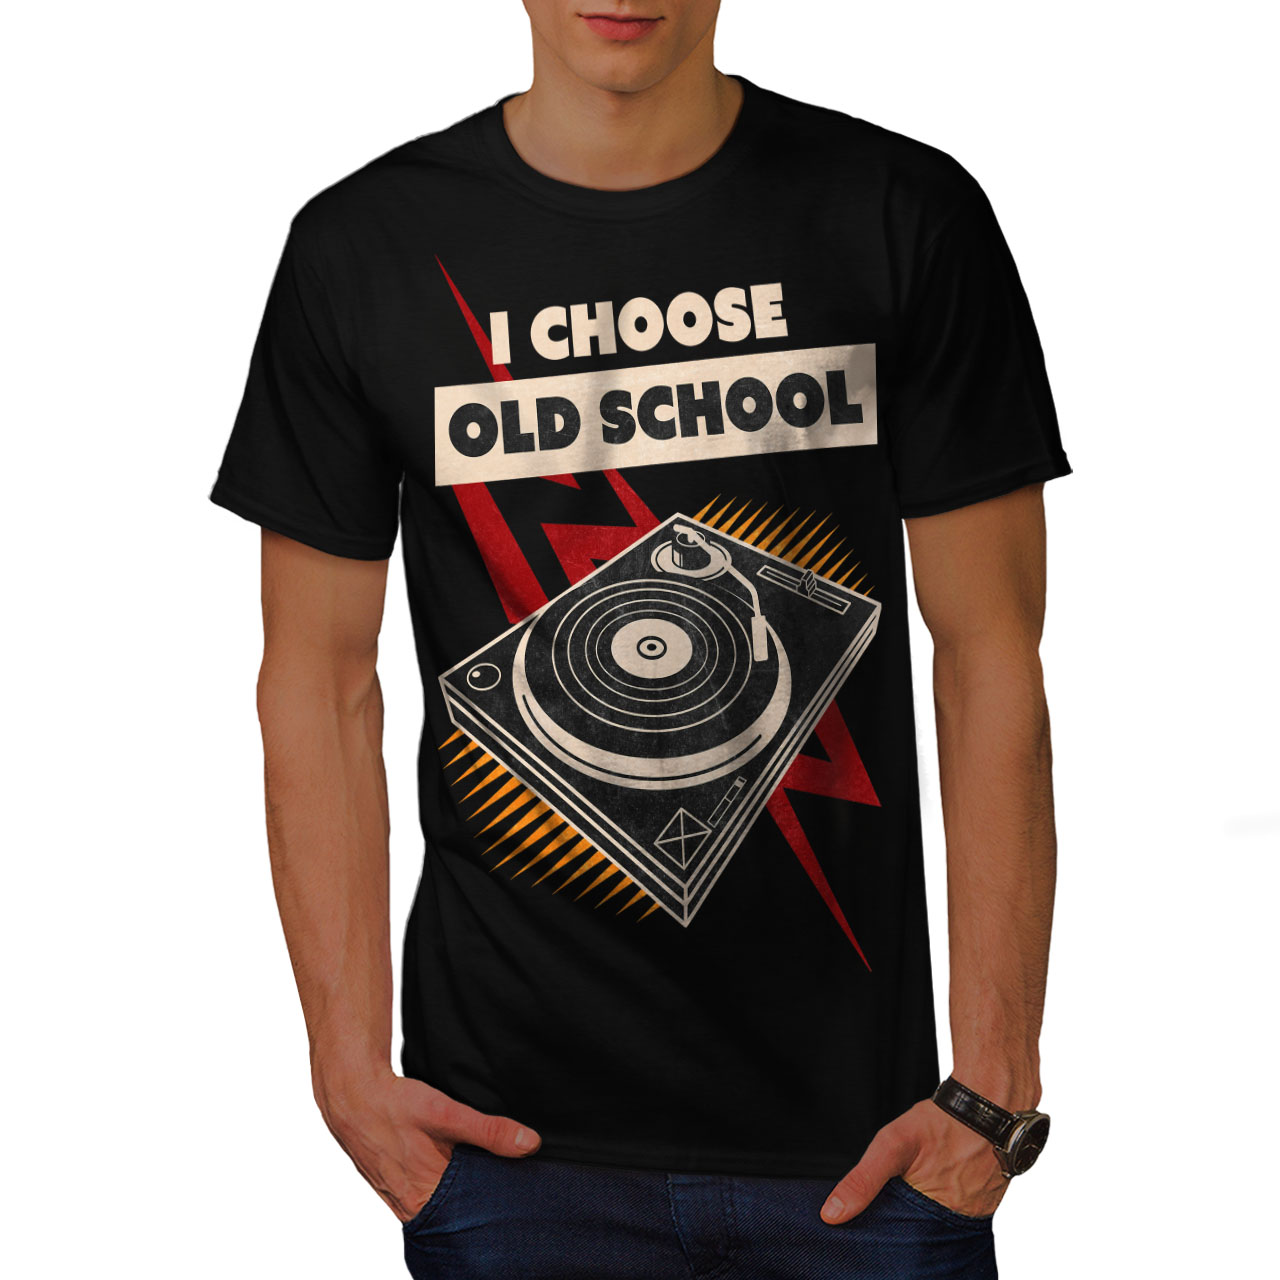 Wellcoda Vinyl Play Mens Tshirt, Oldschool Graphic Design Printed Tee eBay